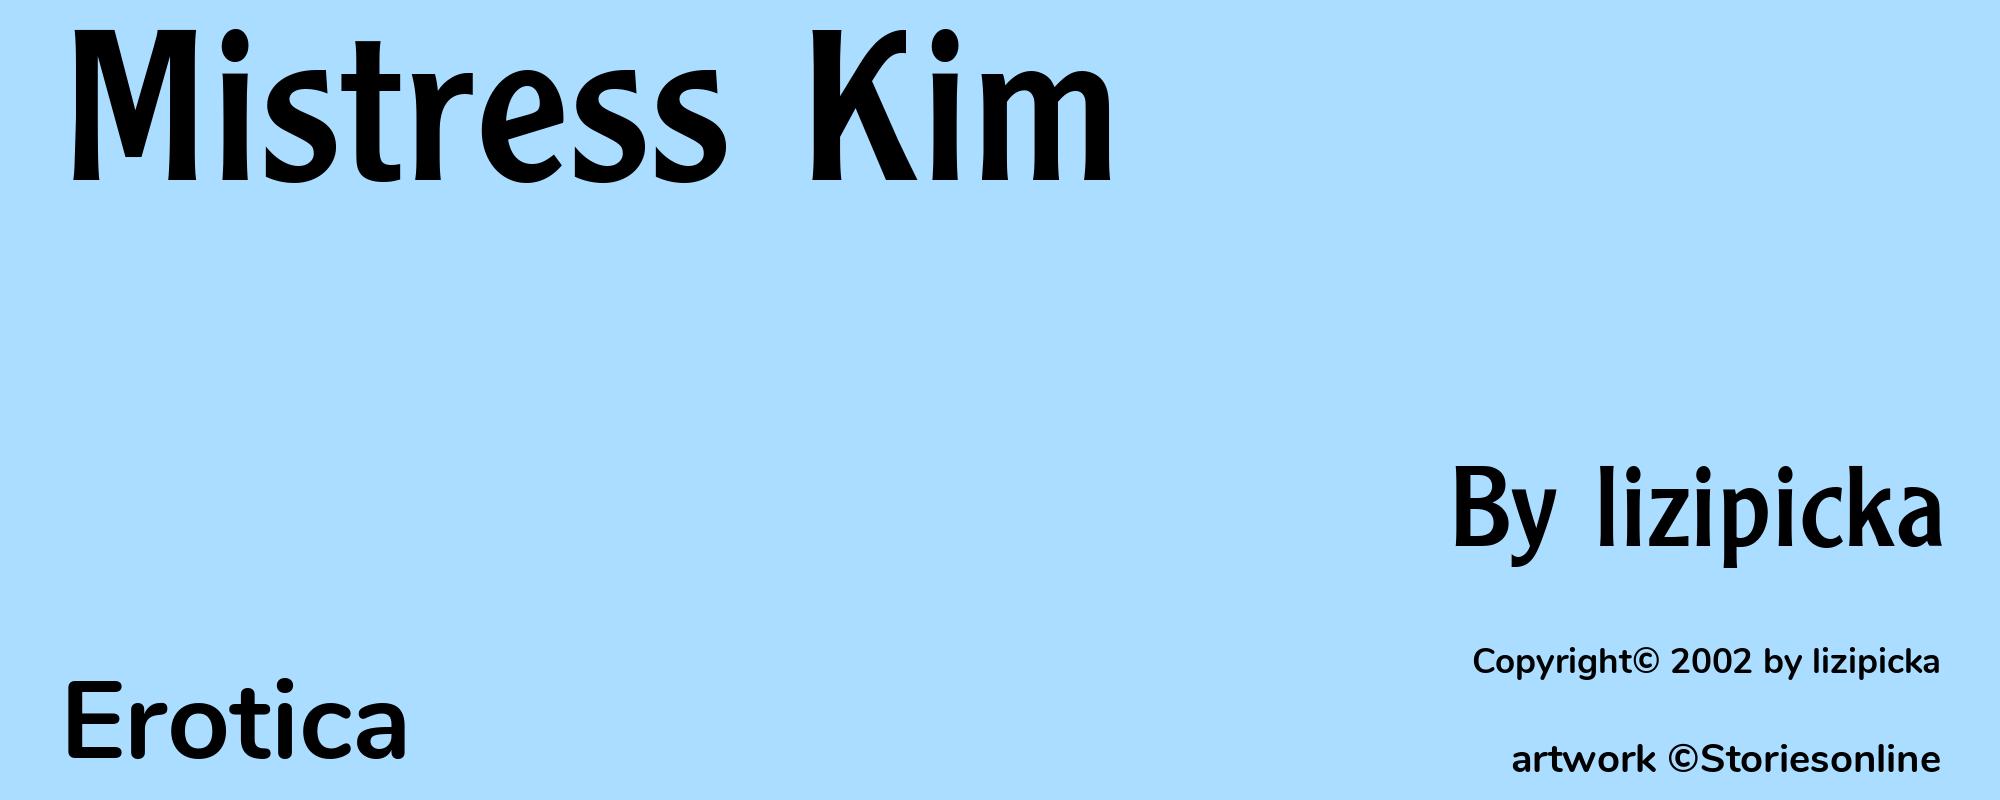 Mistress Kim - Cover